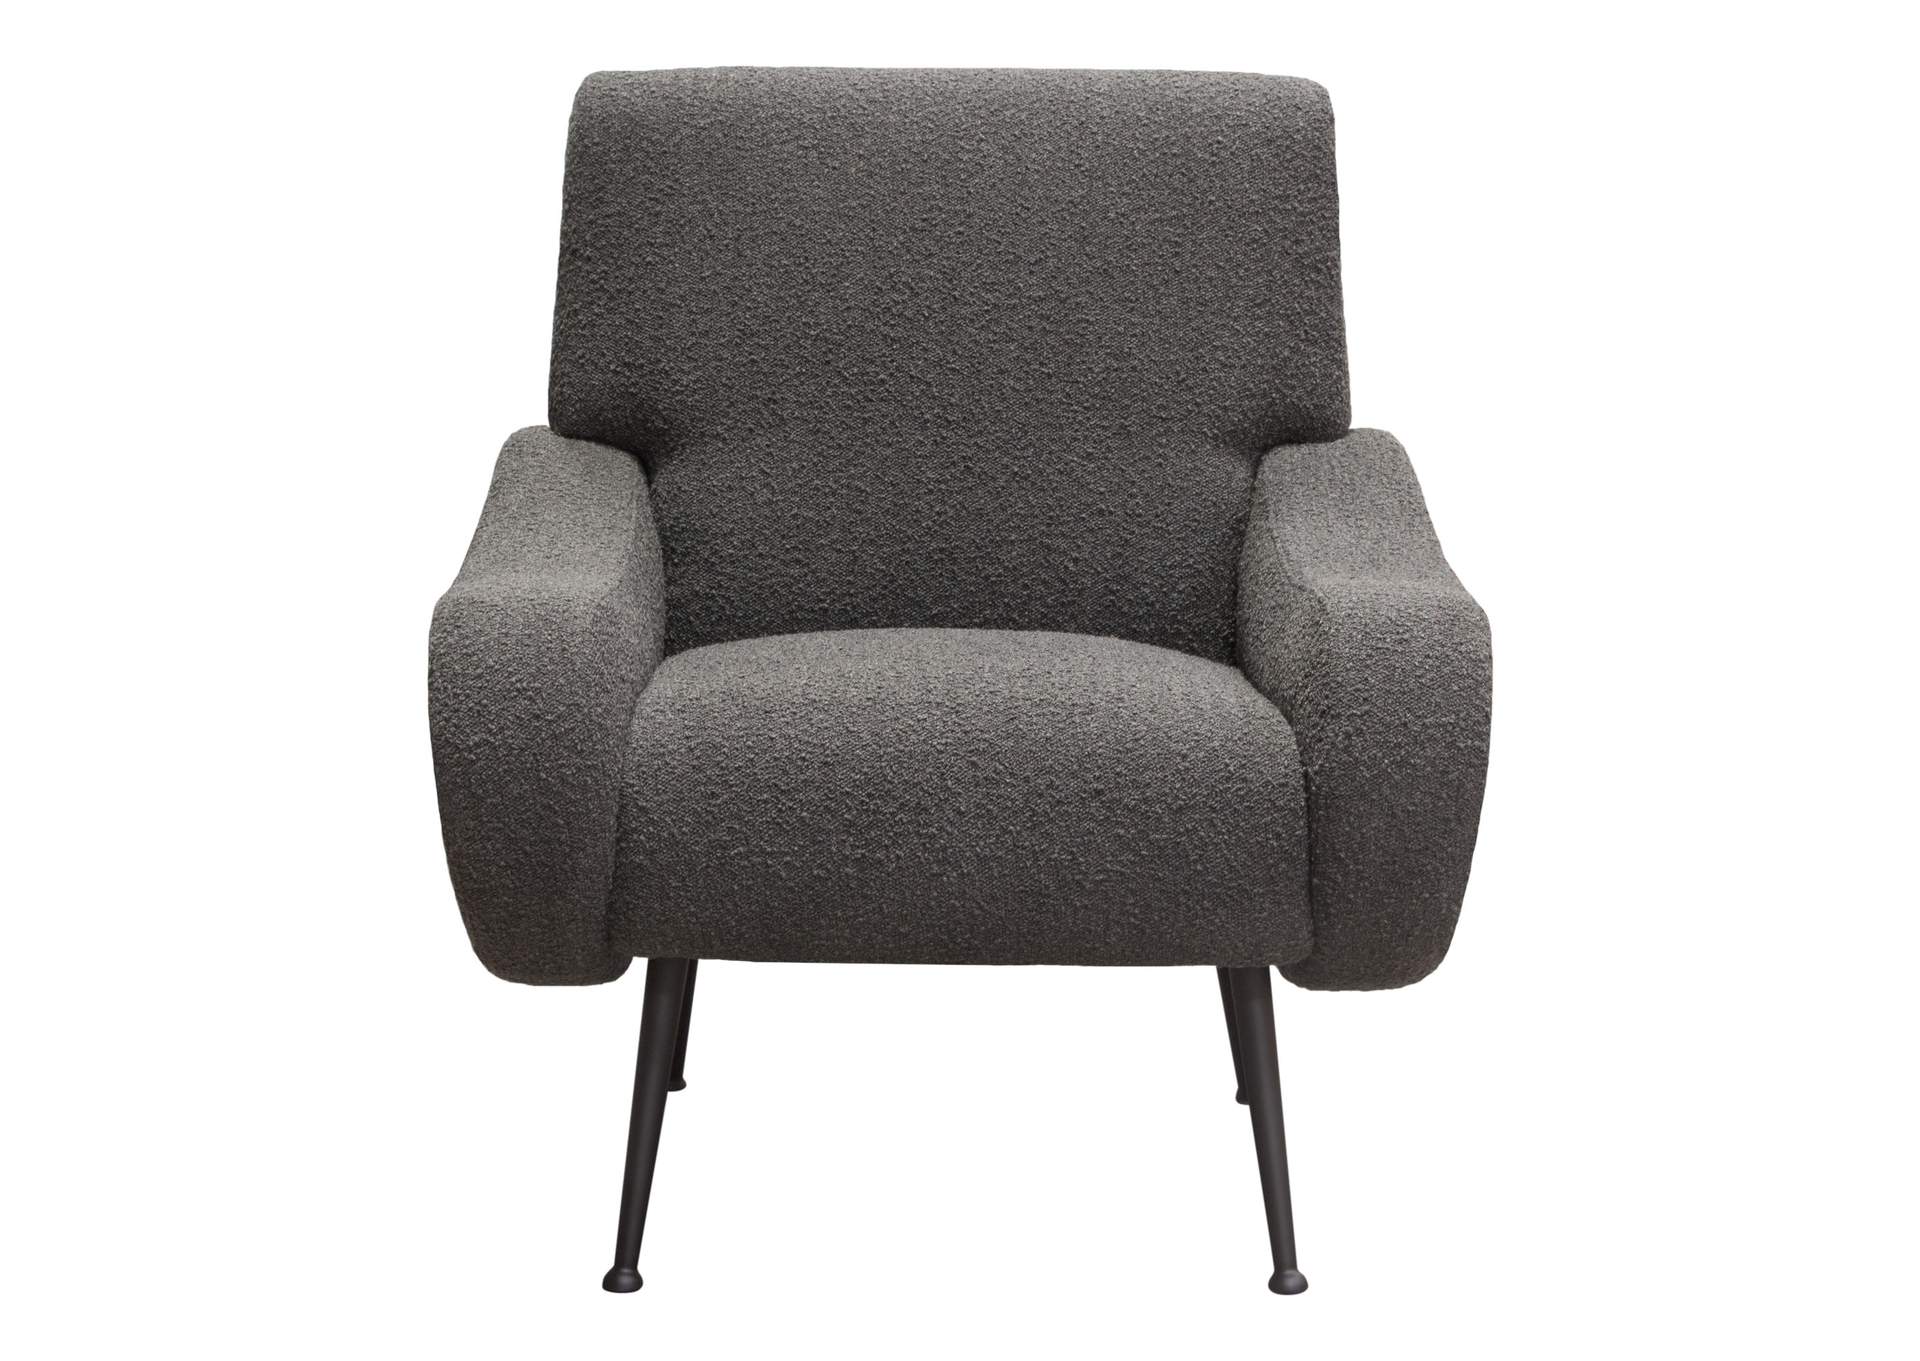 Cameron Accent Chair in Chair Boucle Textured Fabric w/ Black Leg by Diamond Sofa,Diamond Sofa